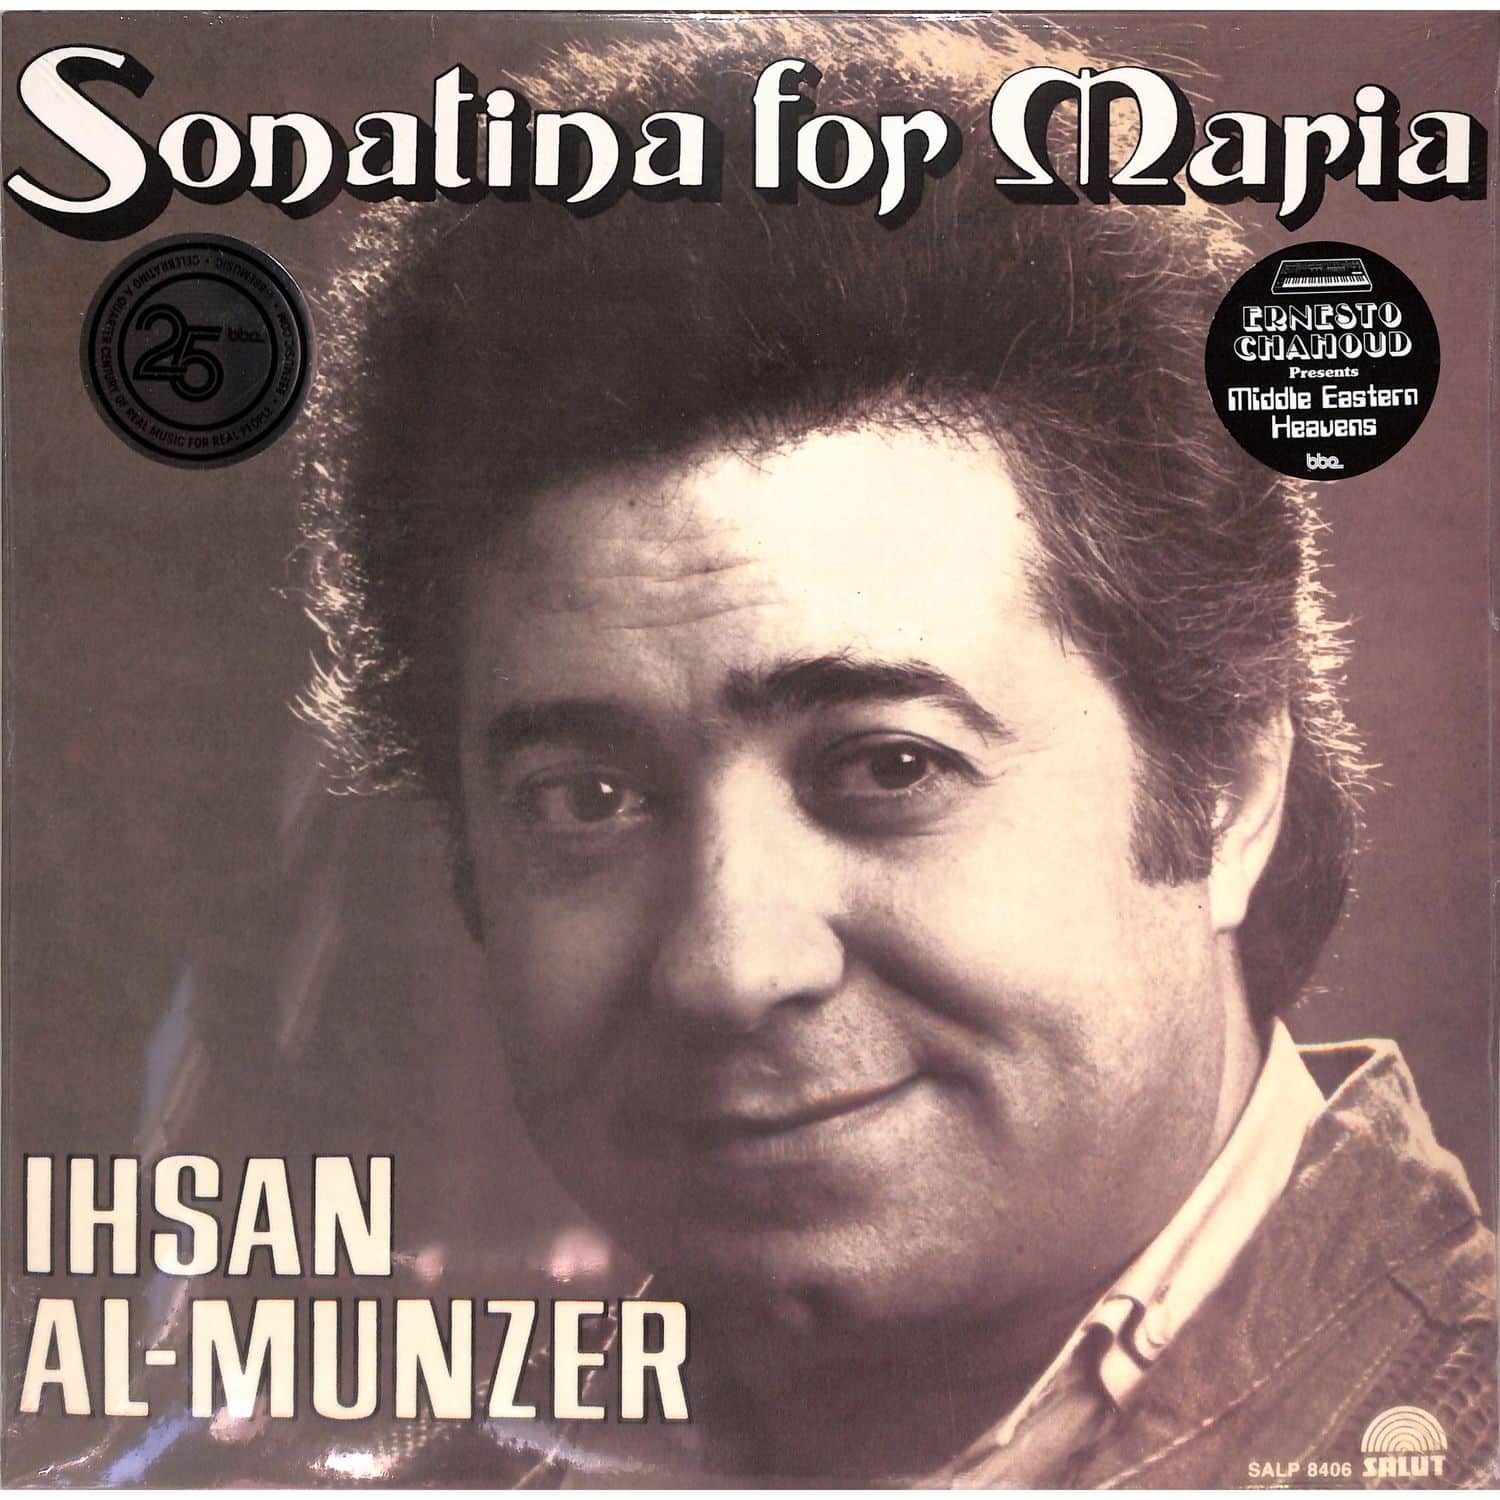 Ihsan Al-Munzer - SONATINA FOR MARIA 